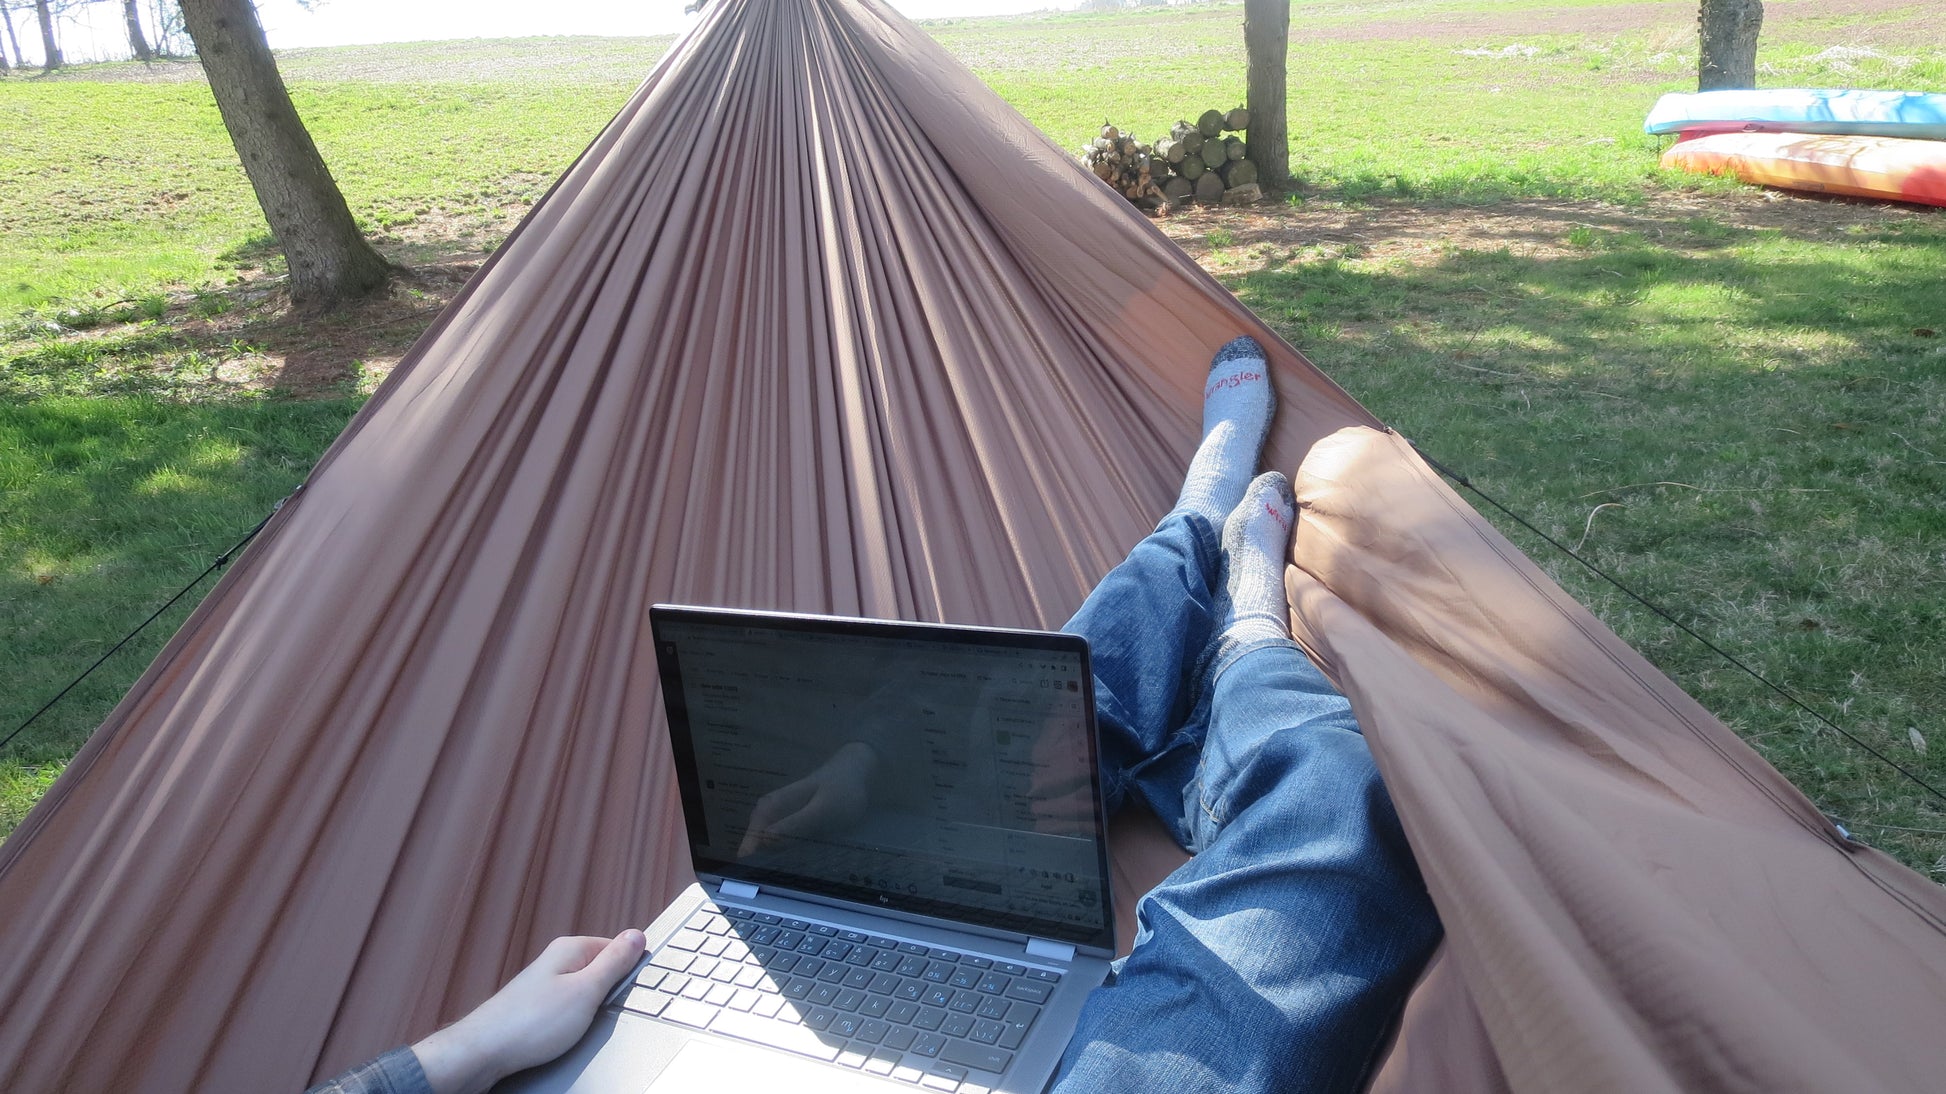 doing computer work in a netless camping hammock freebird model dream hammock